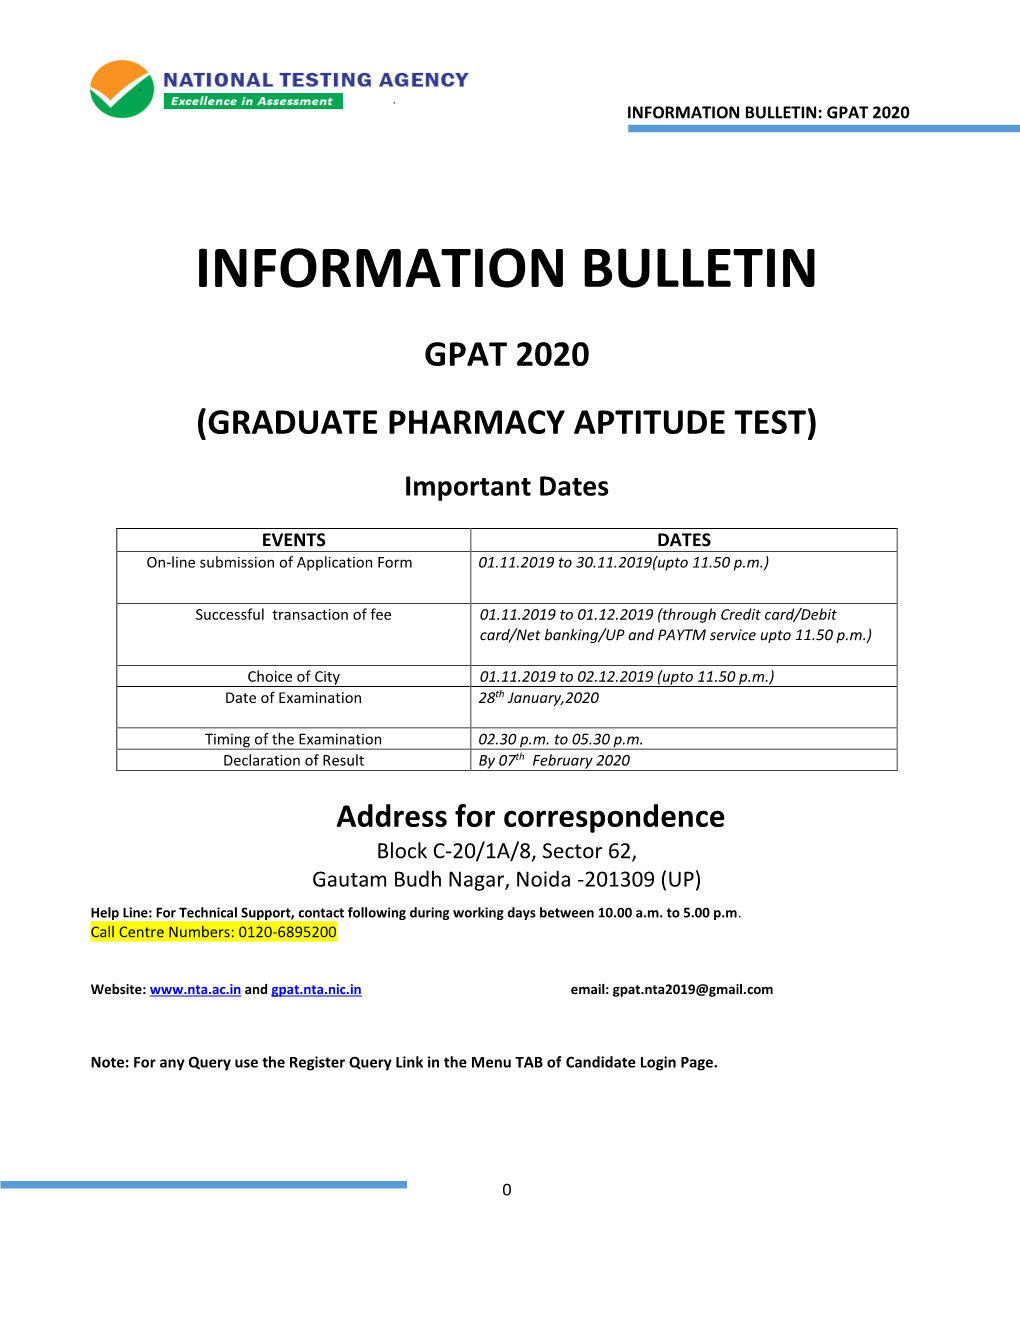 Information Bulletin: Gpat 2020